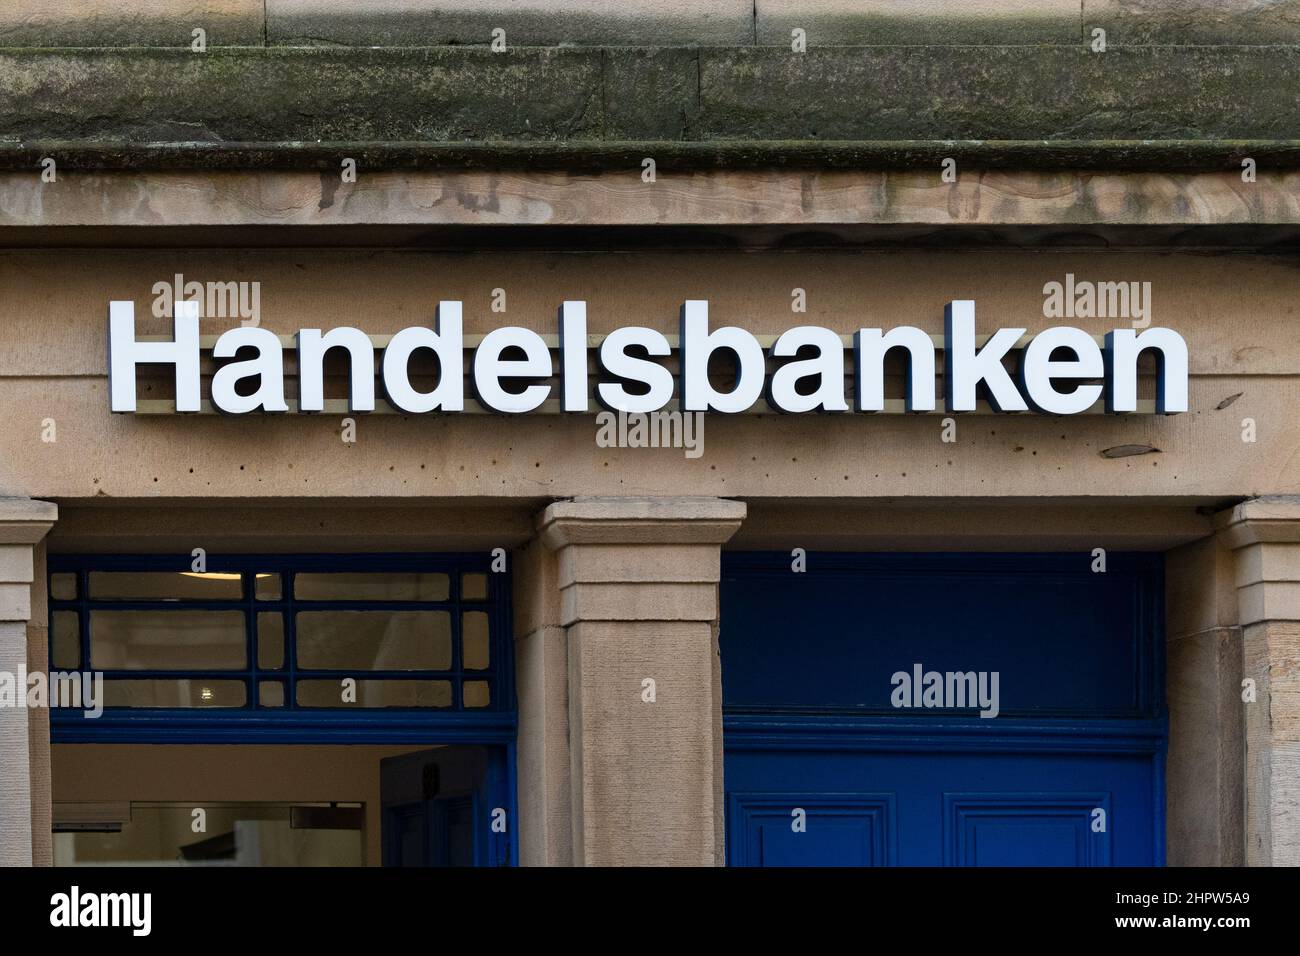 Handelsbanken sign, Lancaster, England, UK Stock Photo